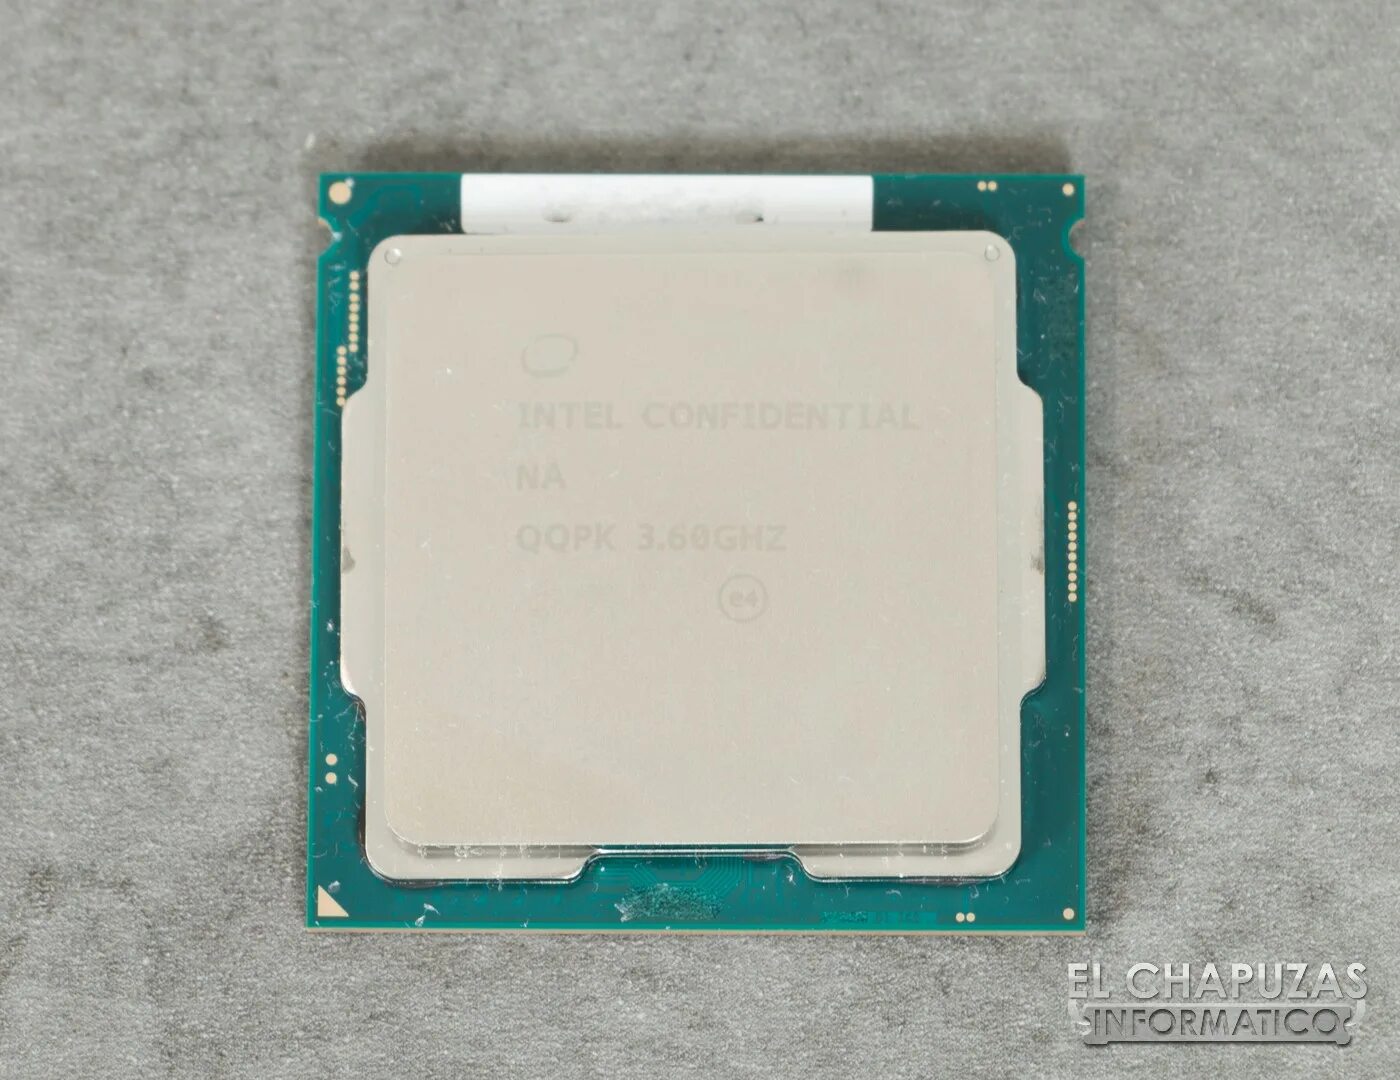 Intel Core i7-9700k. Процессор Intel Core i7 12700k. Процессор Intel Core i7 12700 Box. Восьмиядерный процессор Intel Core i7.